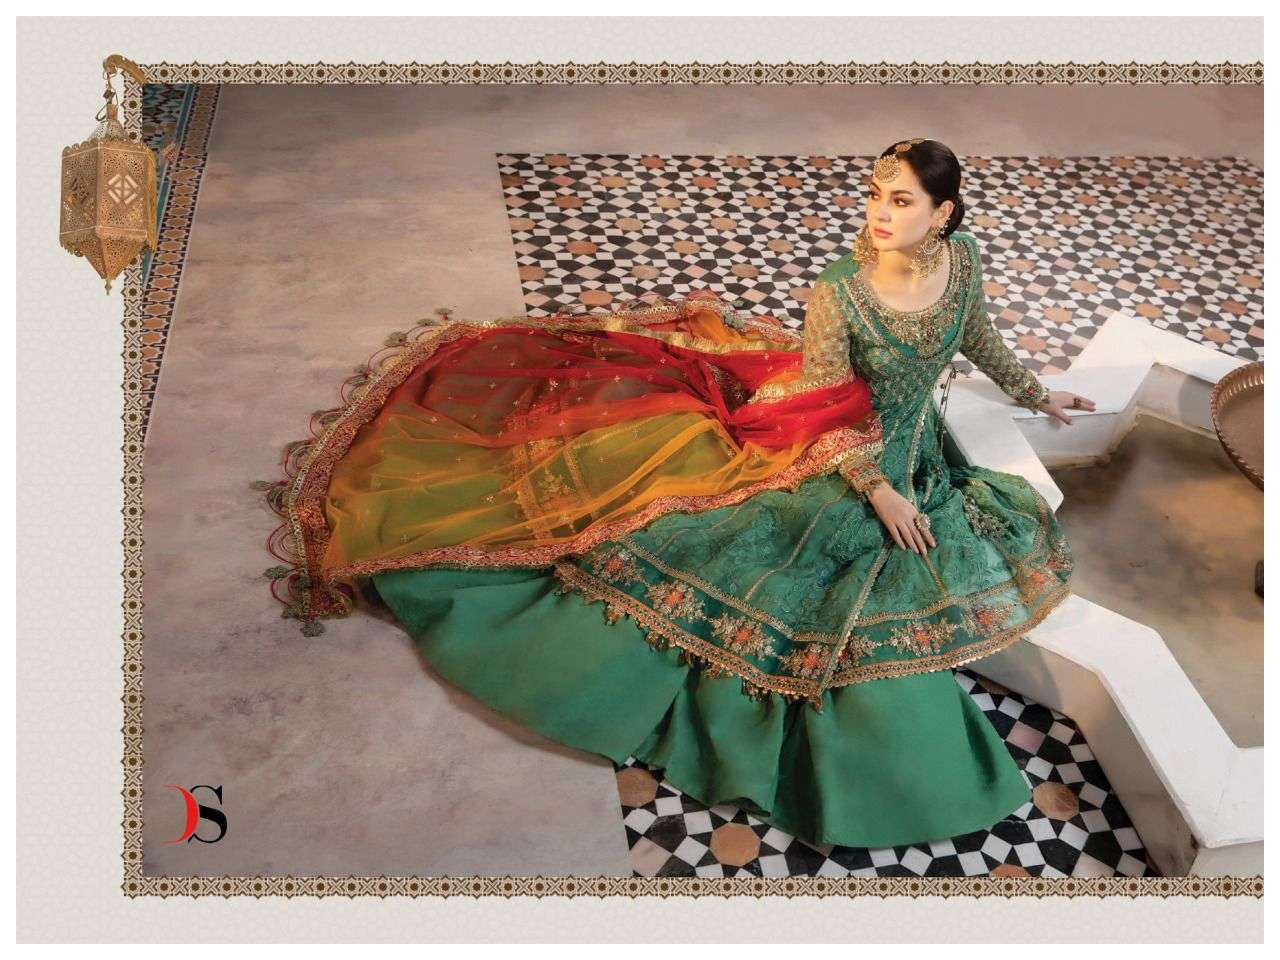 deepsy suits present maria b embroidered vol 22 designer wedding collection salwar kameez online wholesaler surat 